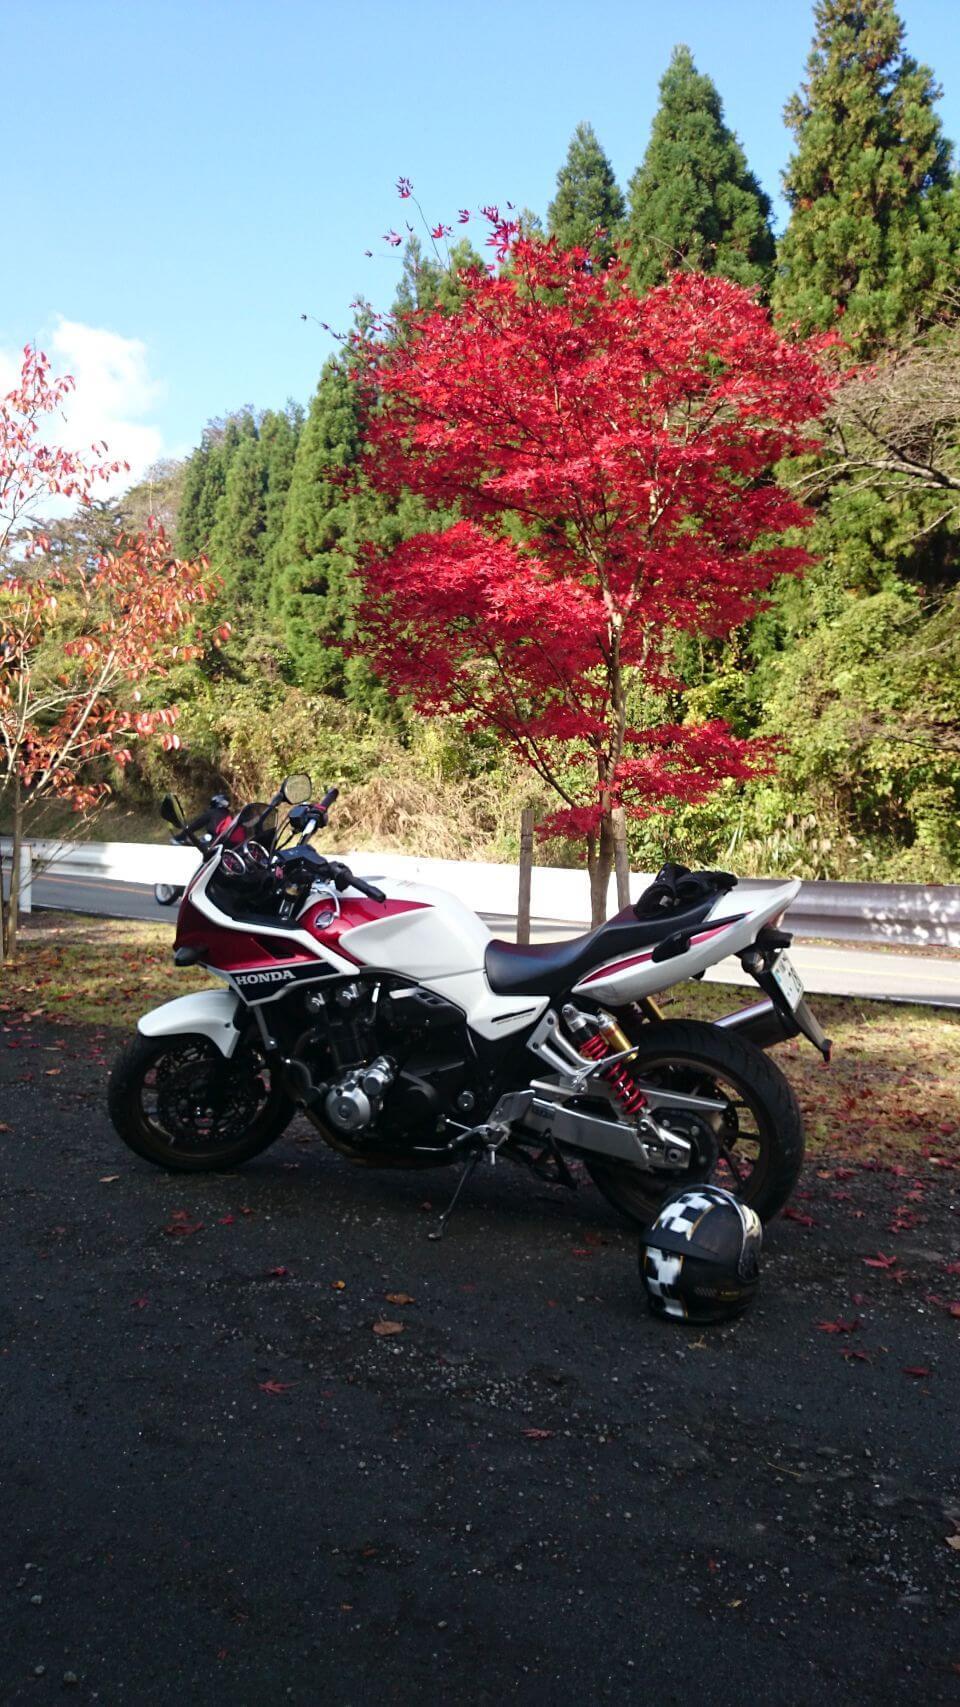 Autumn leaves in Hakone